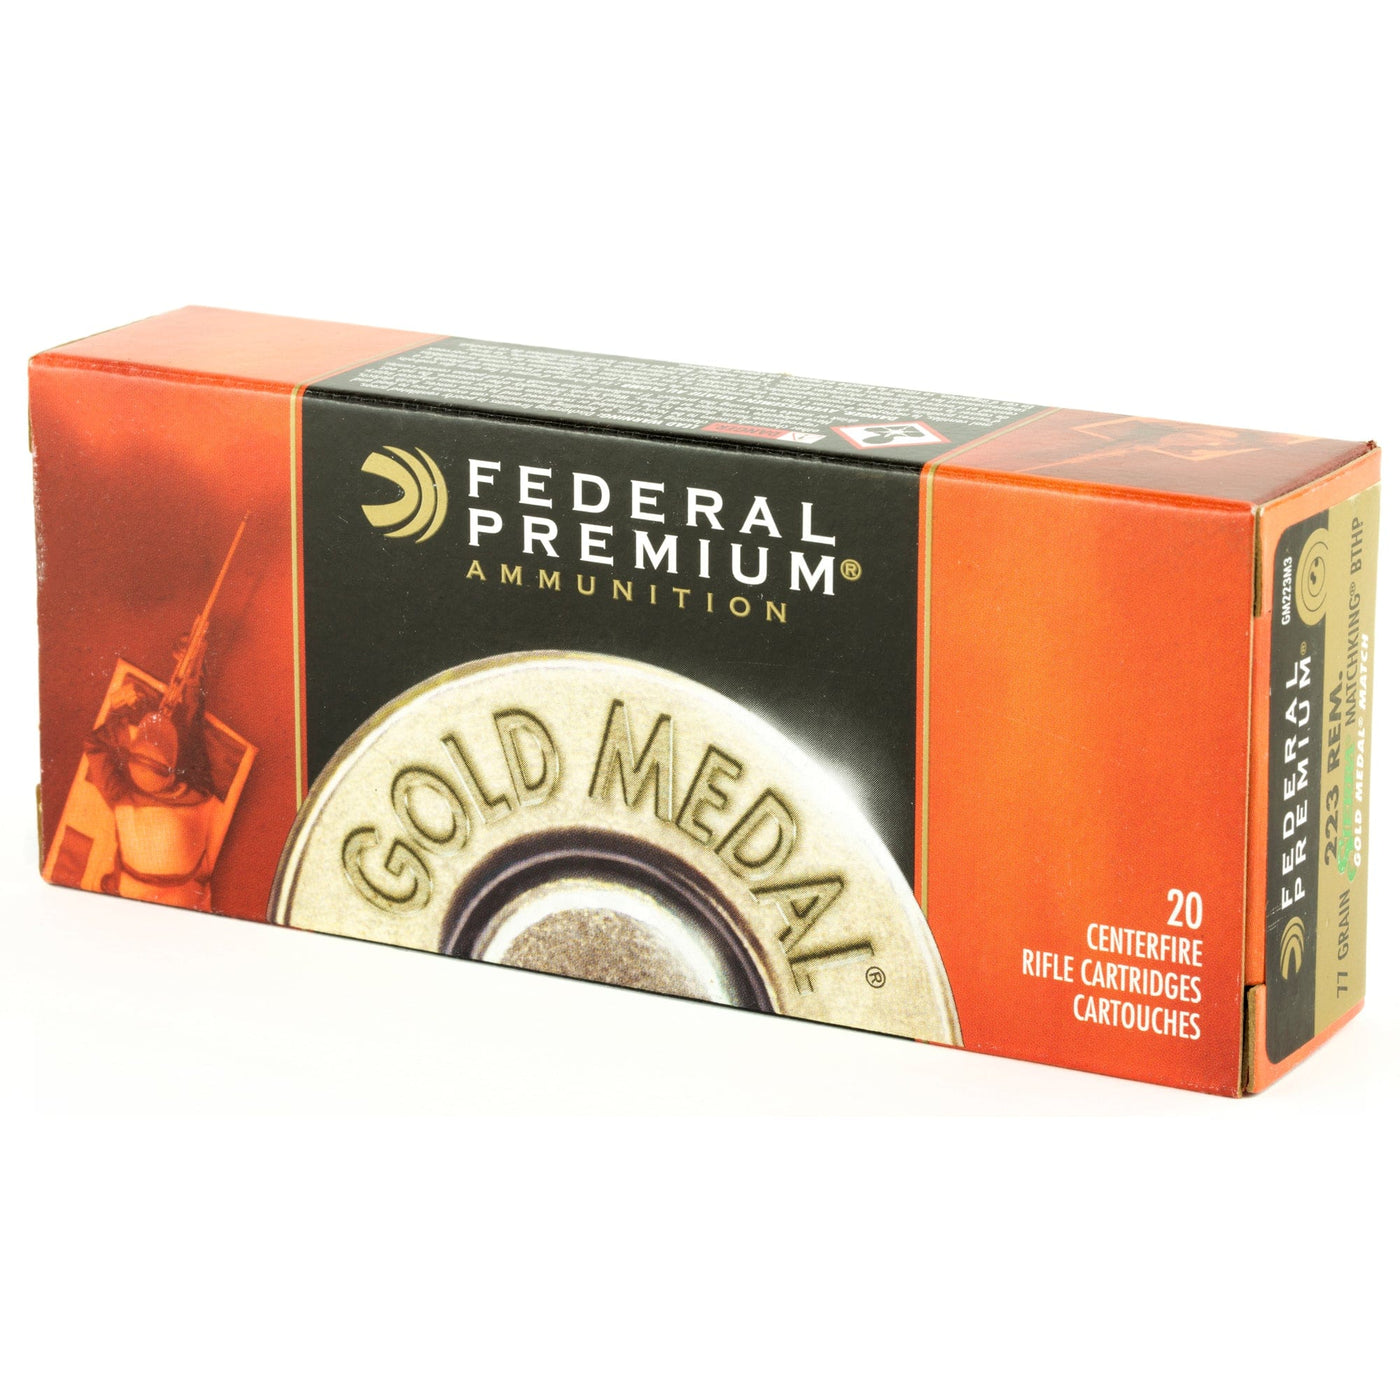 Federal Fed Gold Mdl 223rem 77gr Bthp 20/200 Ammunition